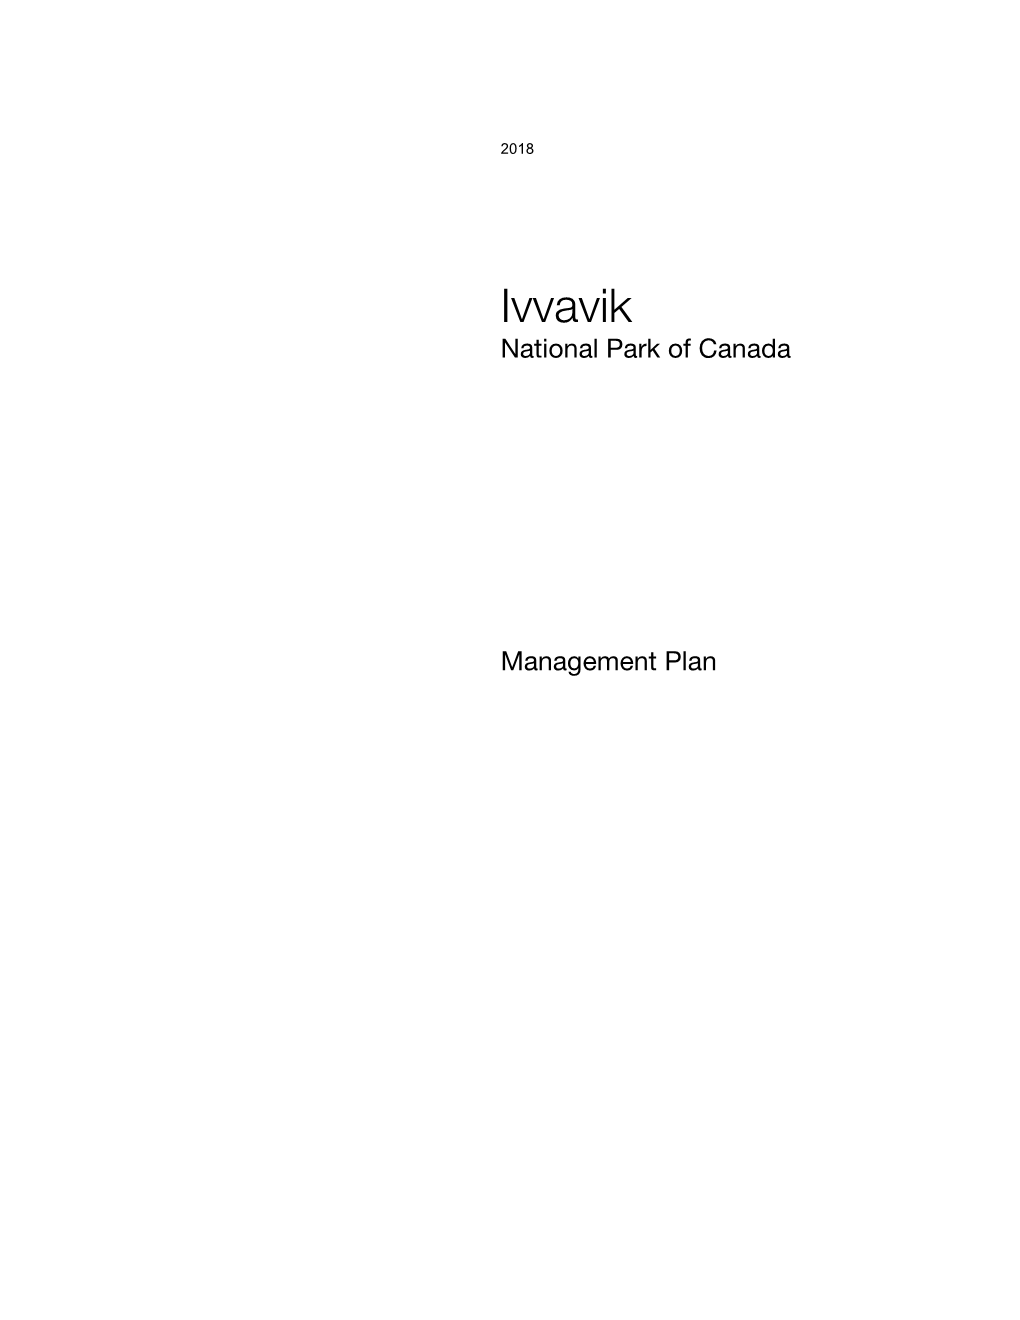 Ivvavik National Park of Canada Management Plan 2018